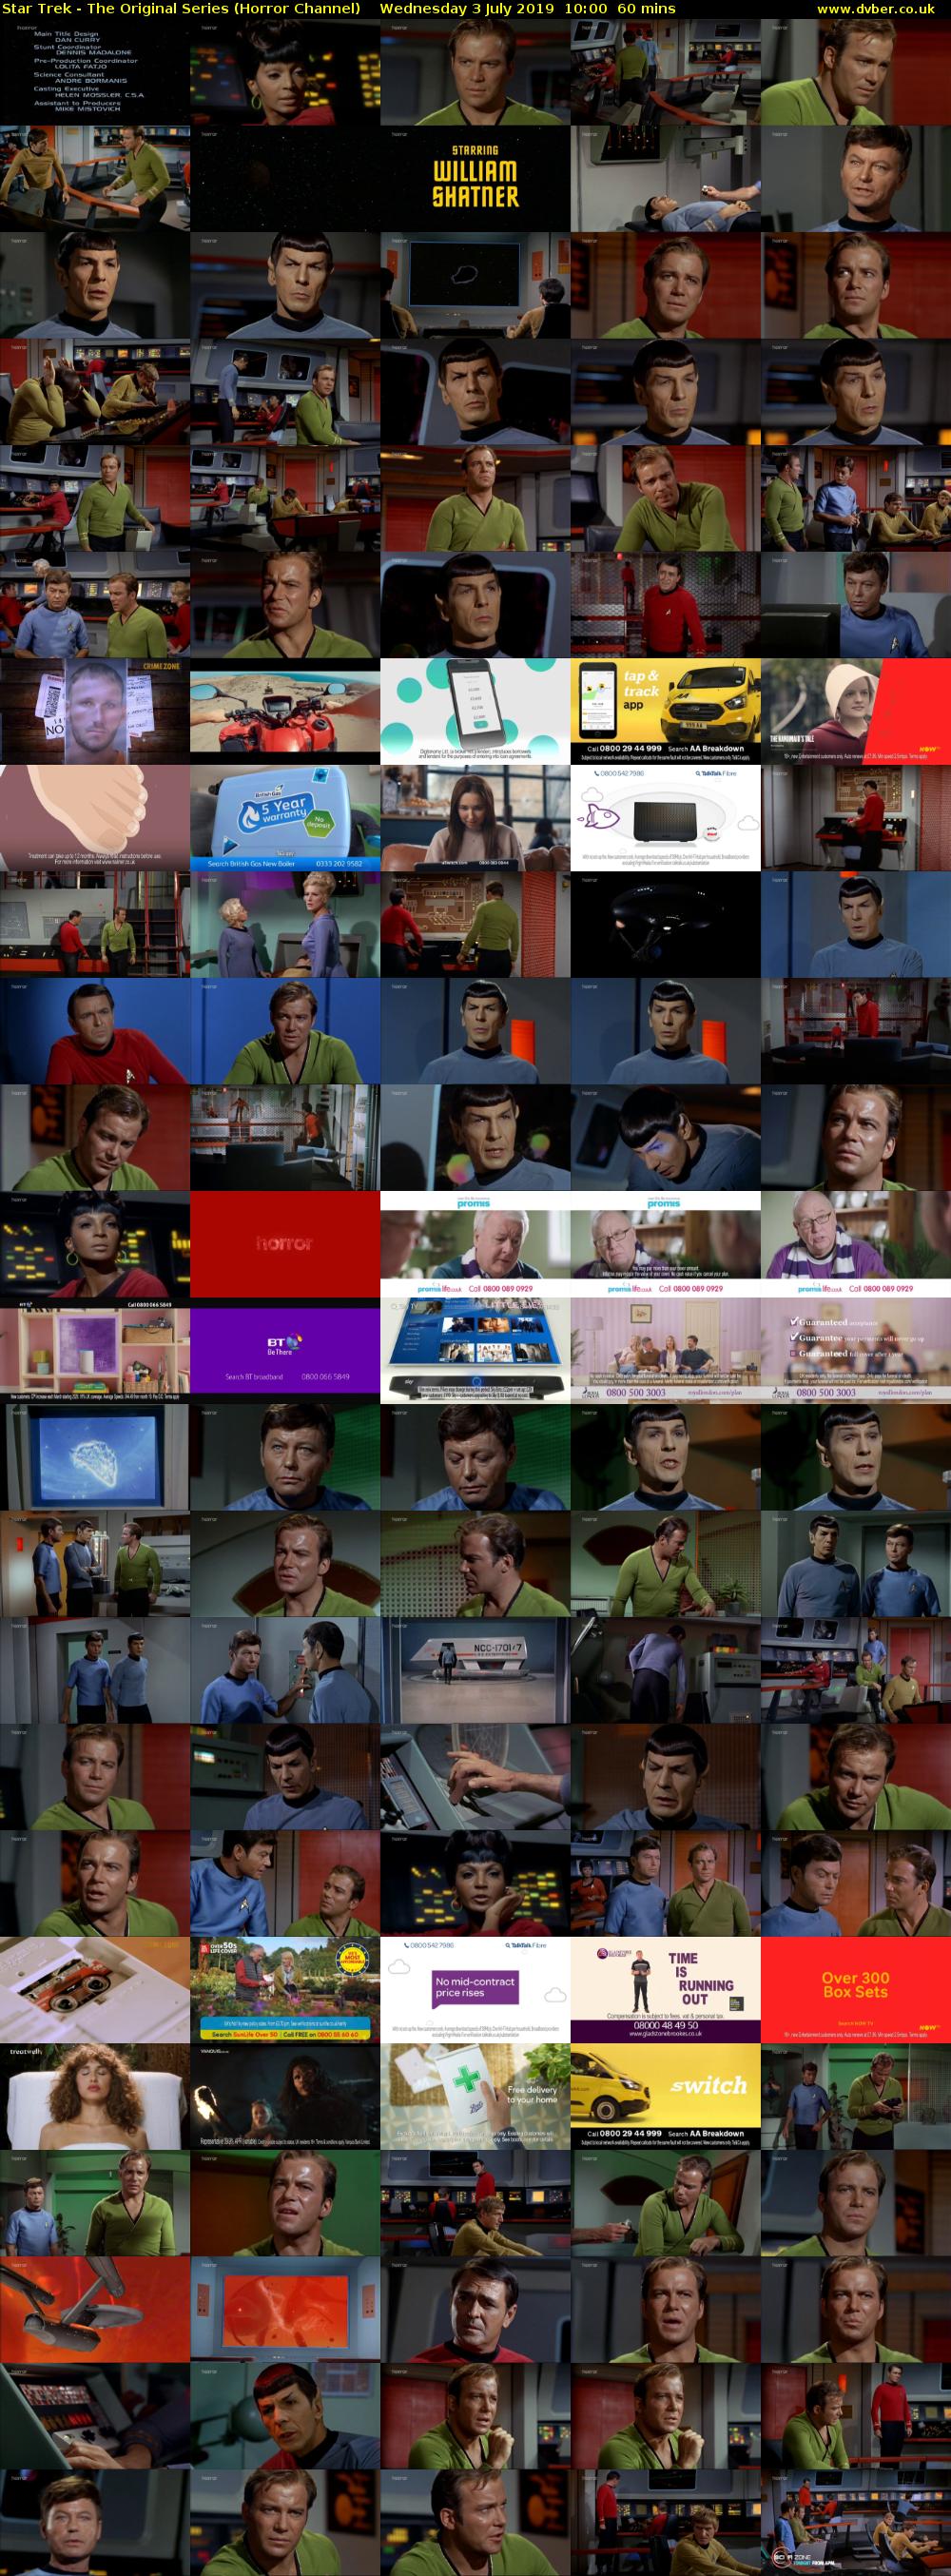 Star Trek - The Original Series (Horror Channel) Wednesday 3 July 2019 10:00 - 11:00